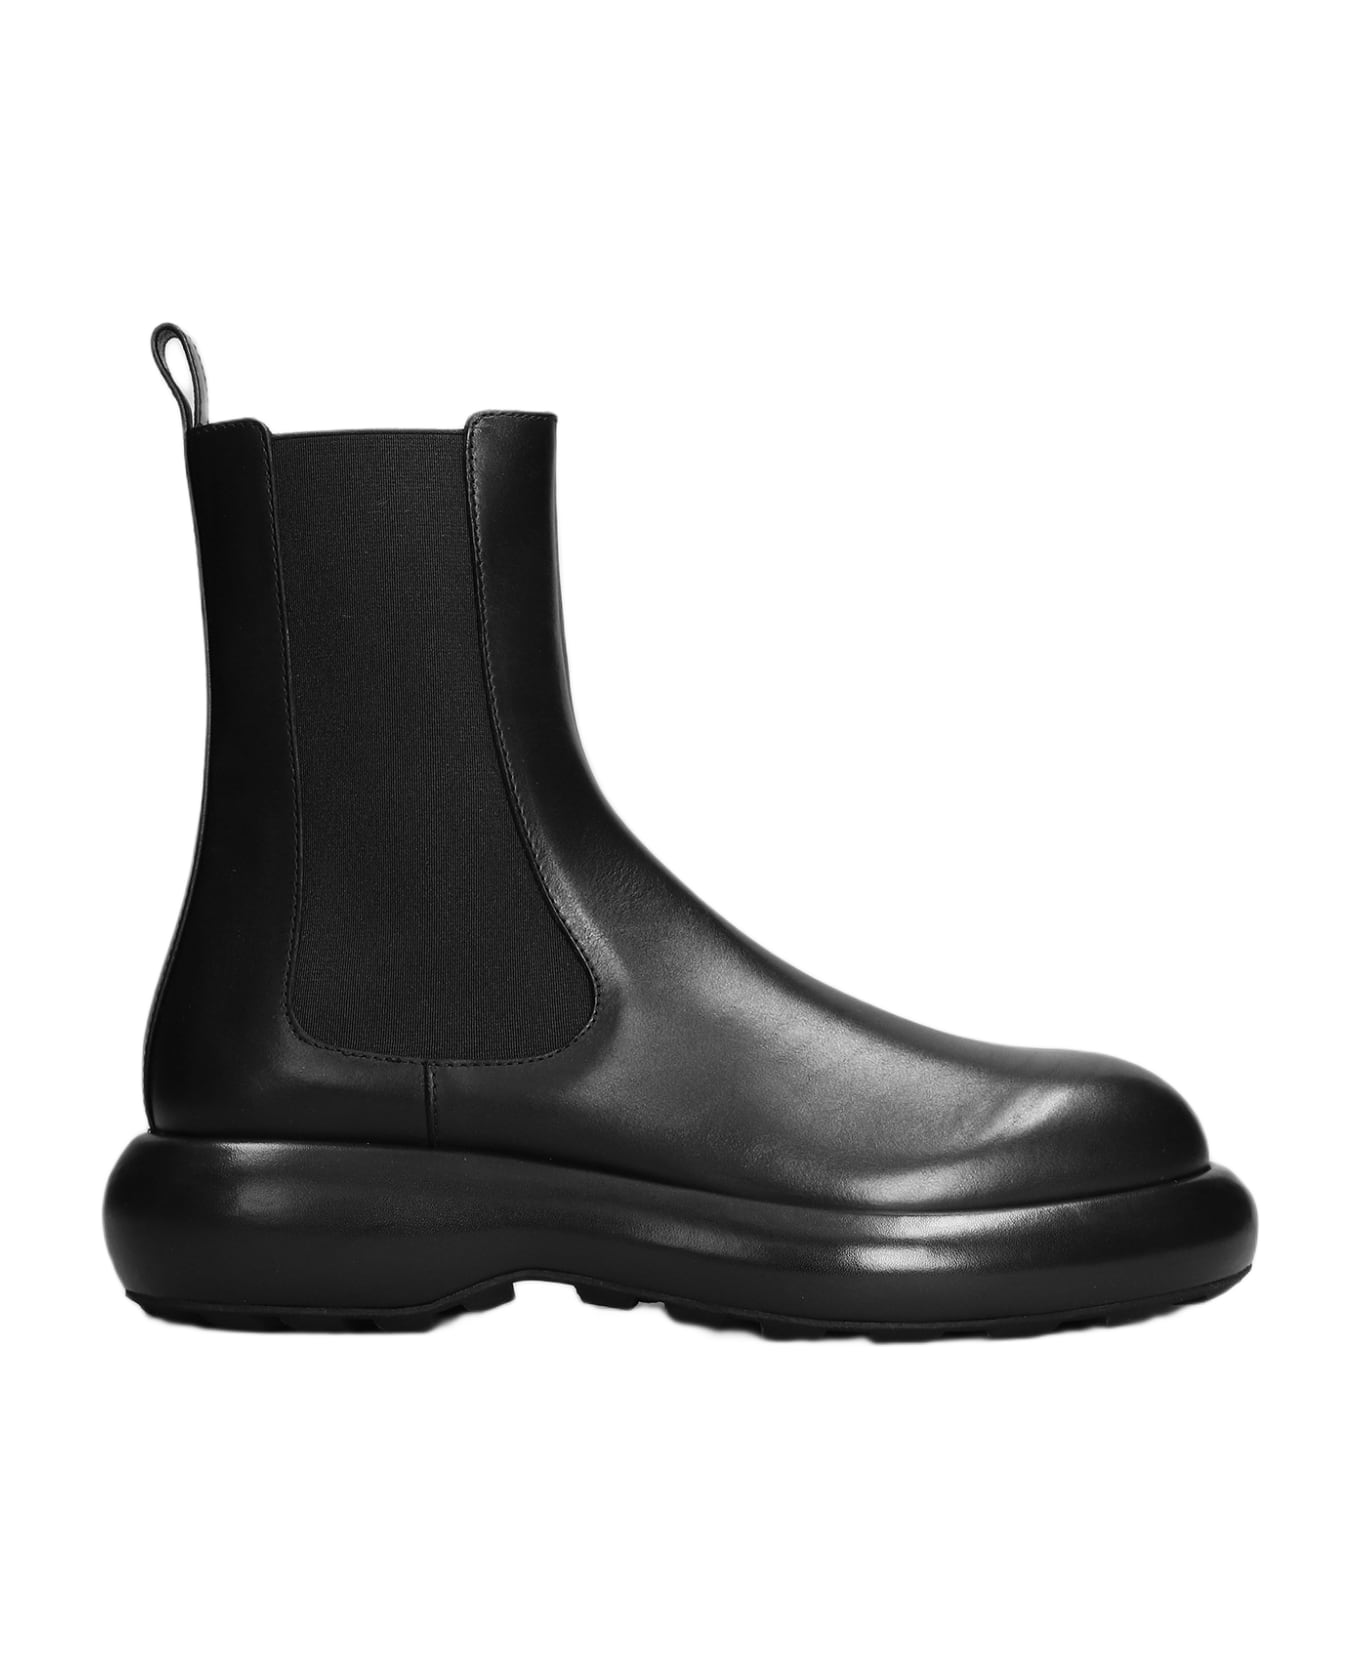 Jil Sander Low Heels Ankle Boots In Black Leather - BLACK